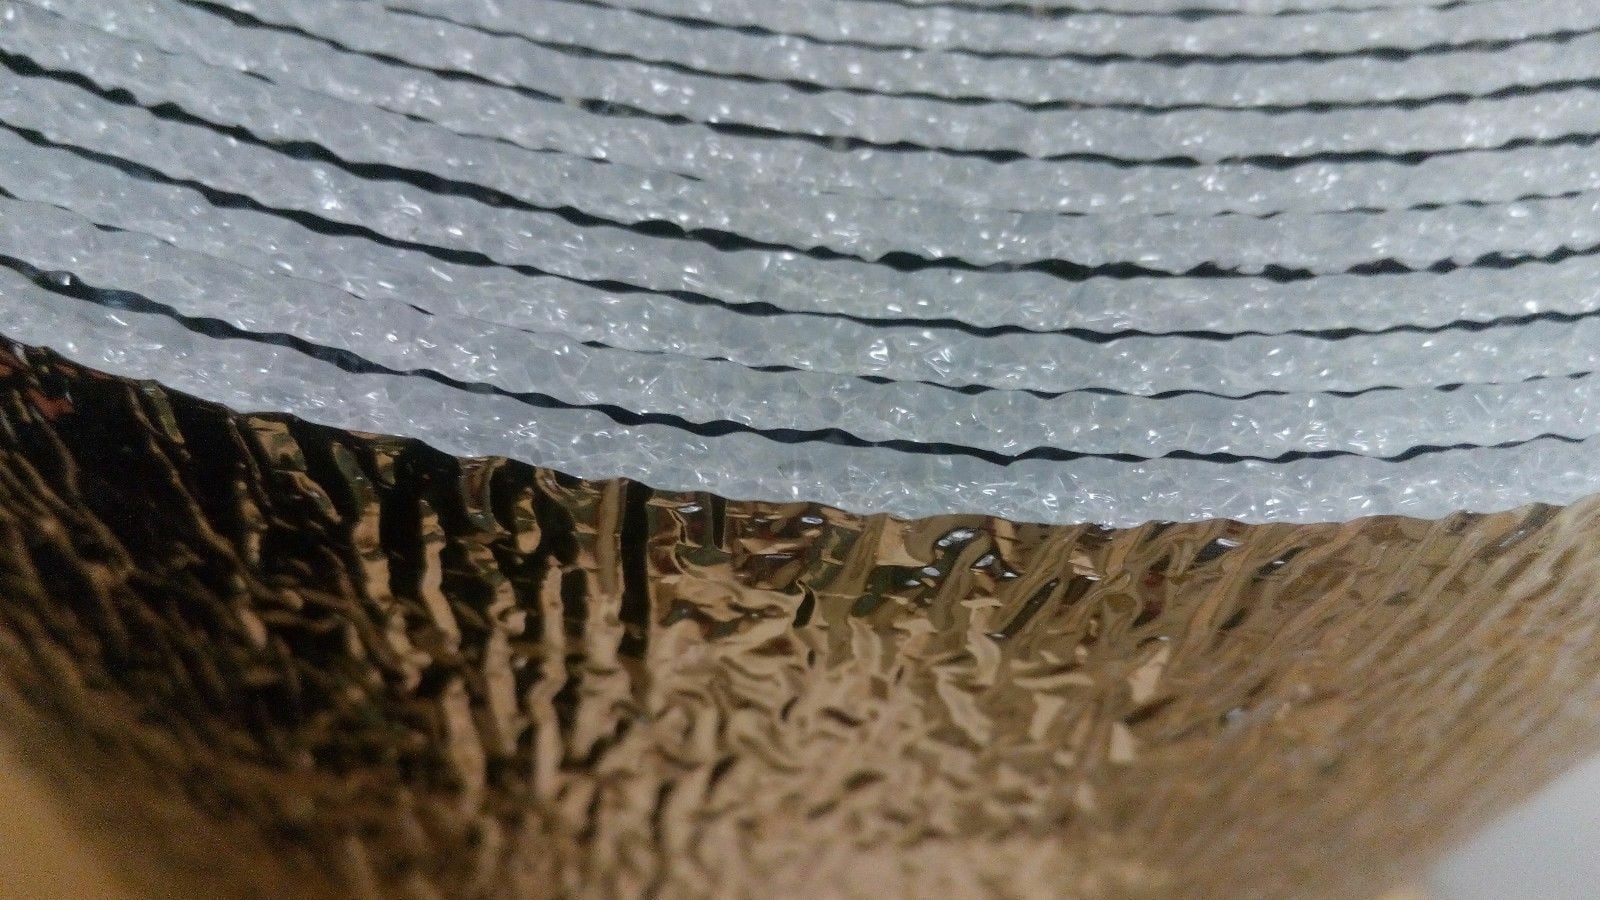 Reflective Foam Insulation Heat Shield Thermal Insulation Shield 48"x10ft 